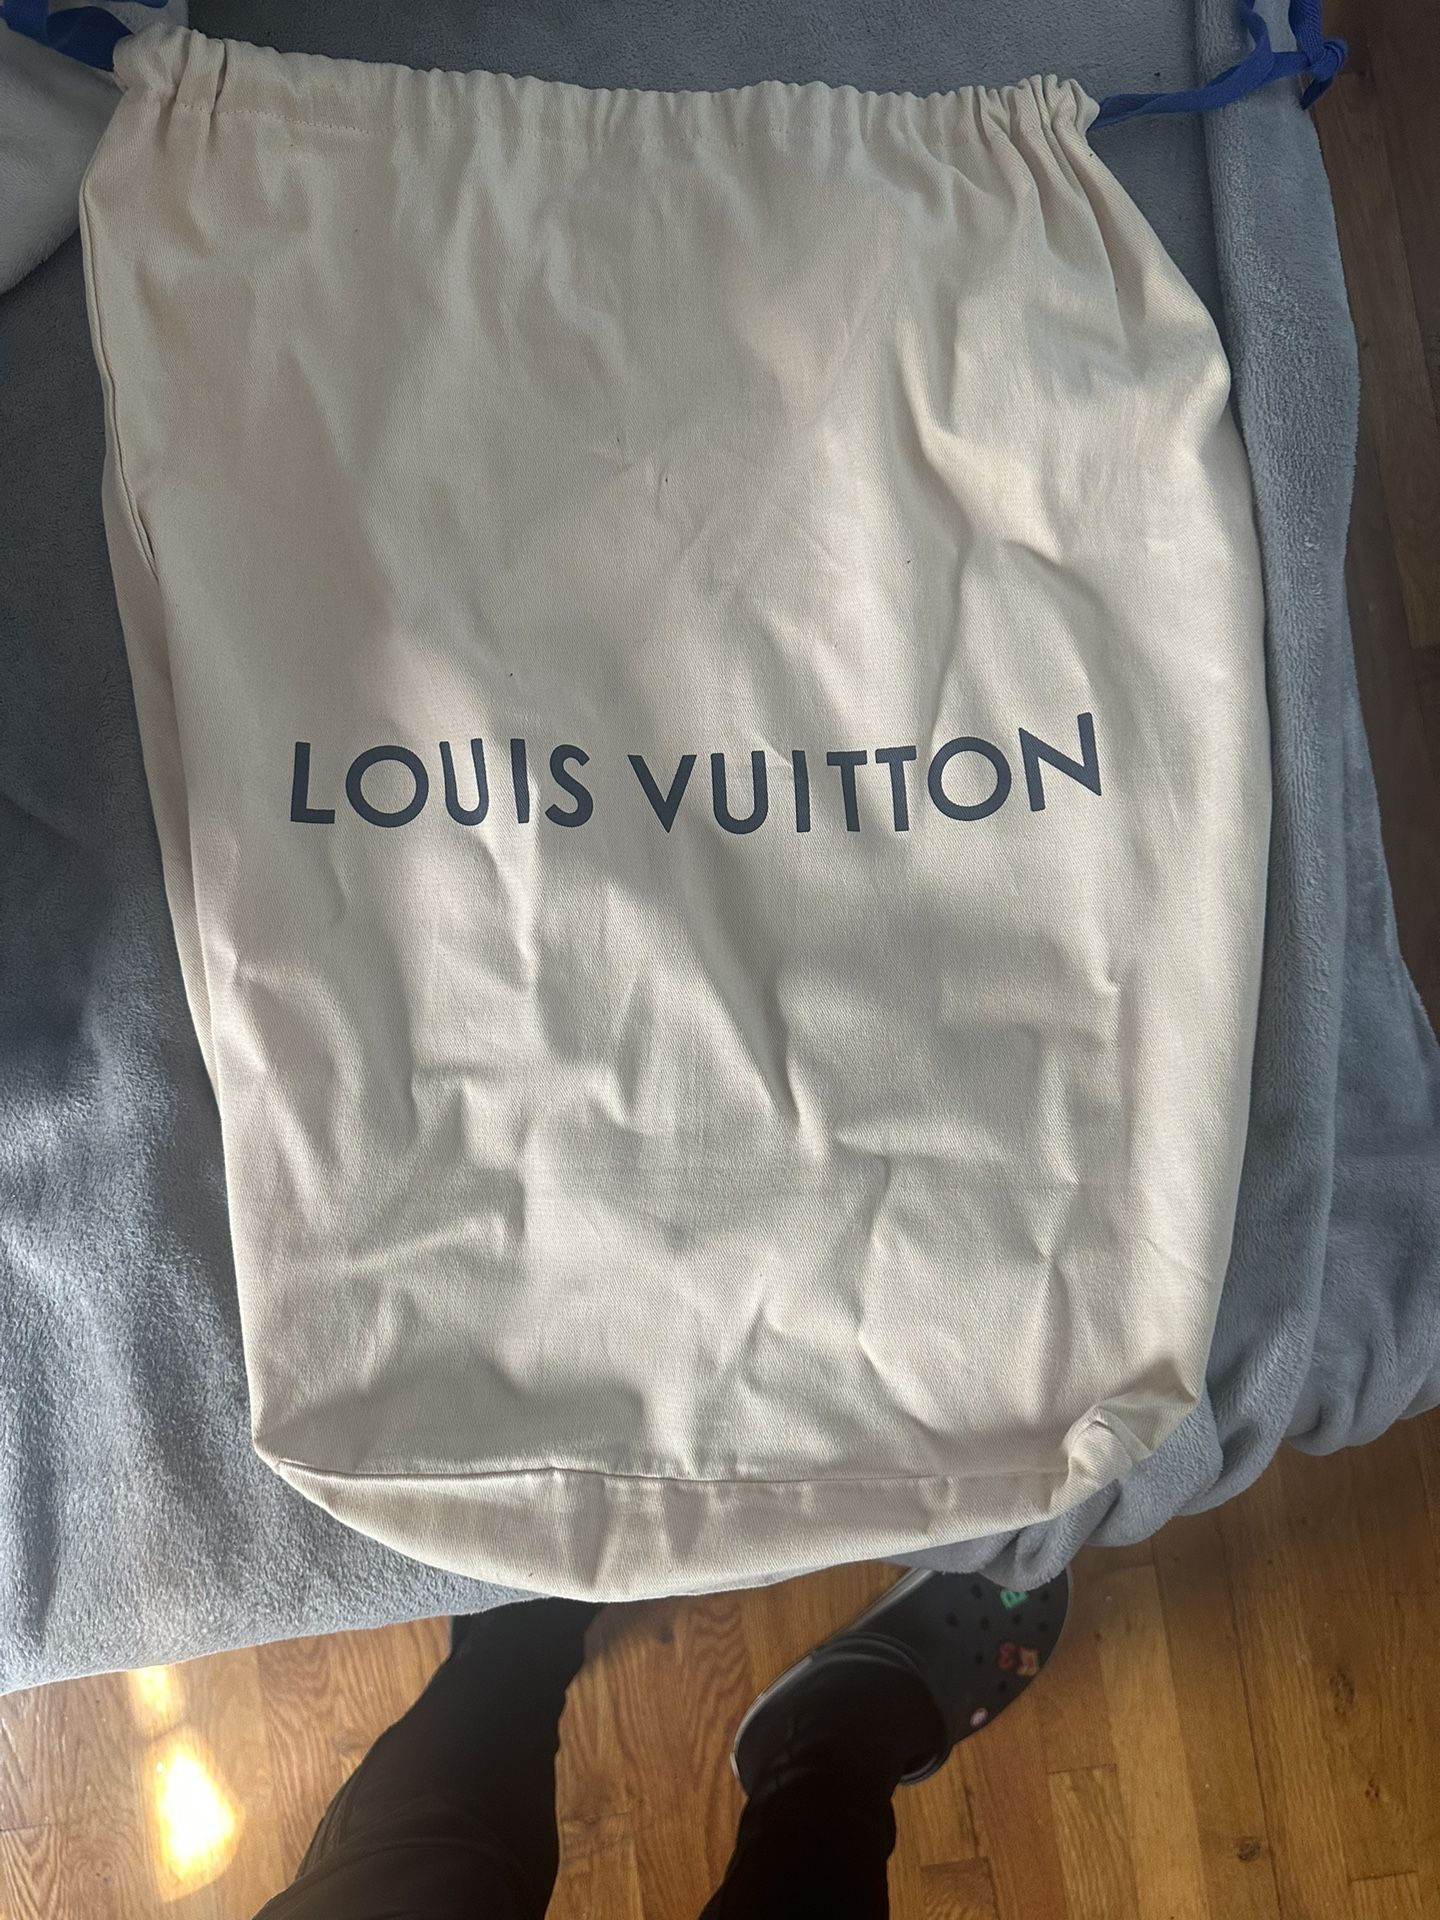 Louis Vuitton Speedy 30 Monogram (pre-loved) for Sale in Toms River, NJ -  OfferUp